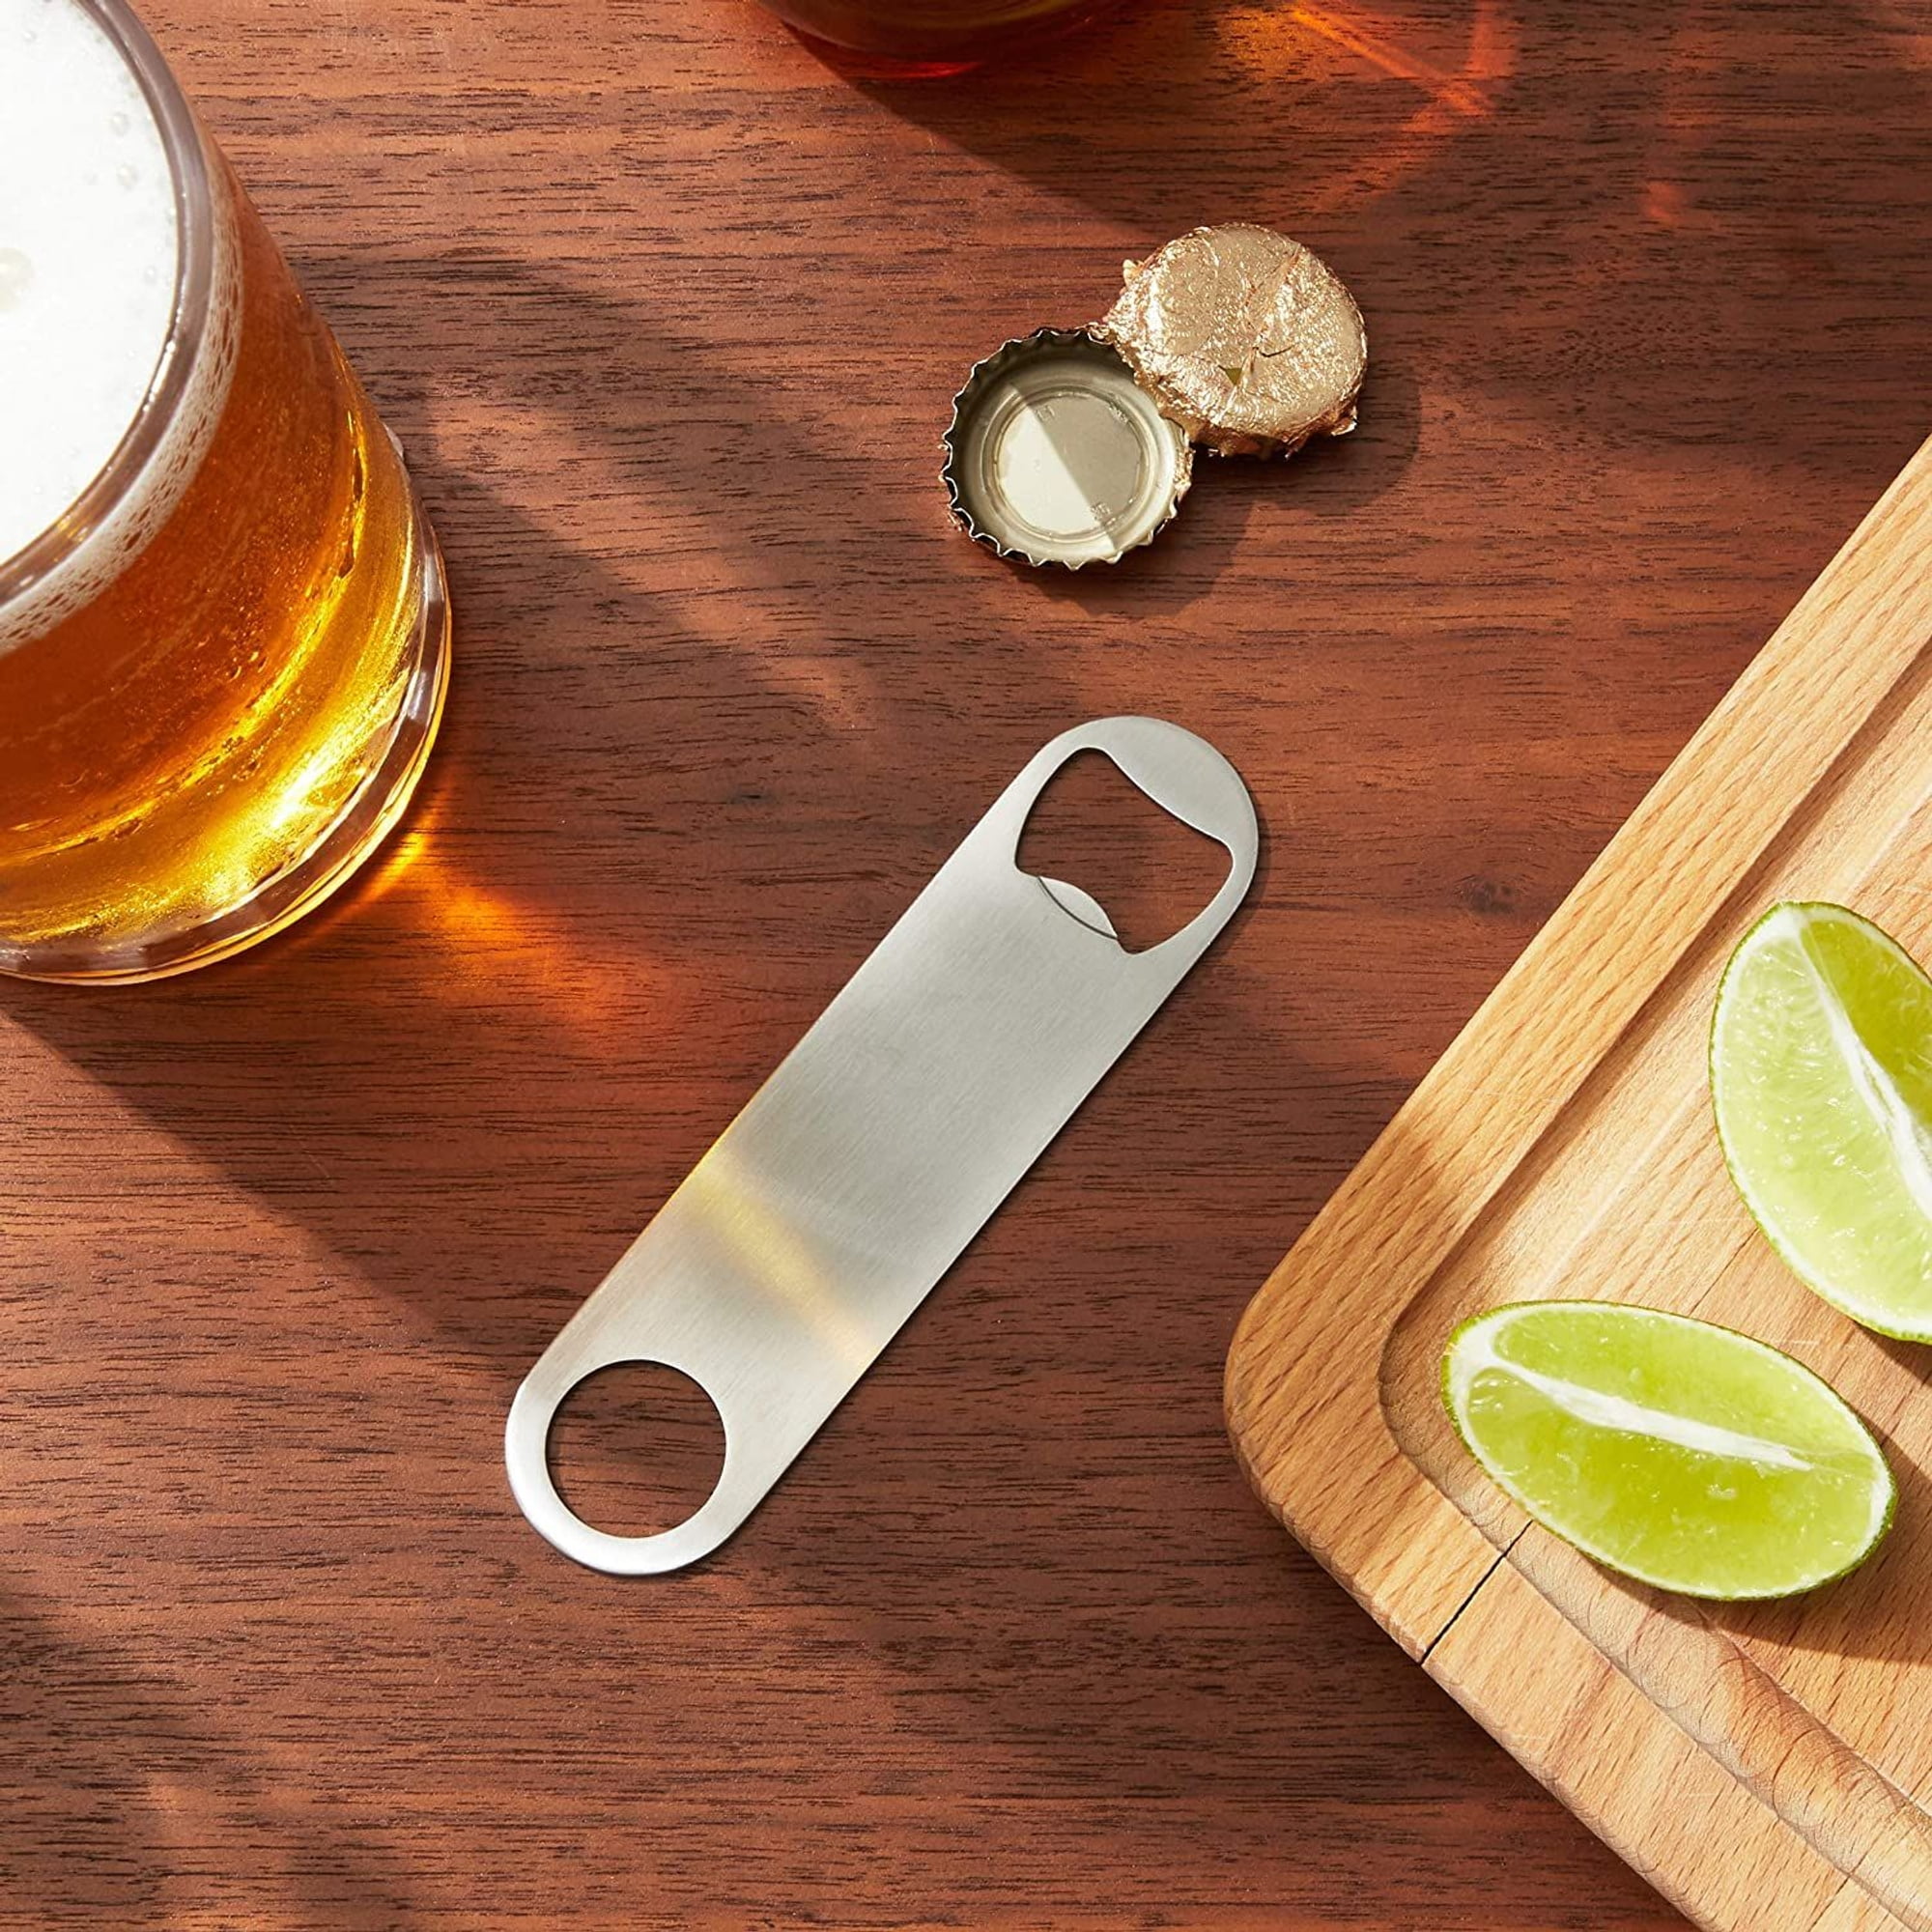 DUNLAGUE Soda Can Opener and Beer Bottle Opener Bartender with 4.2